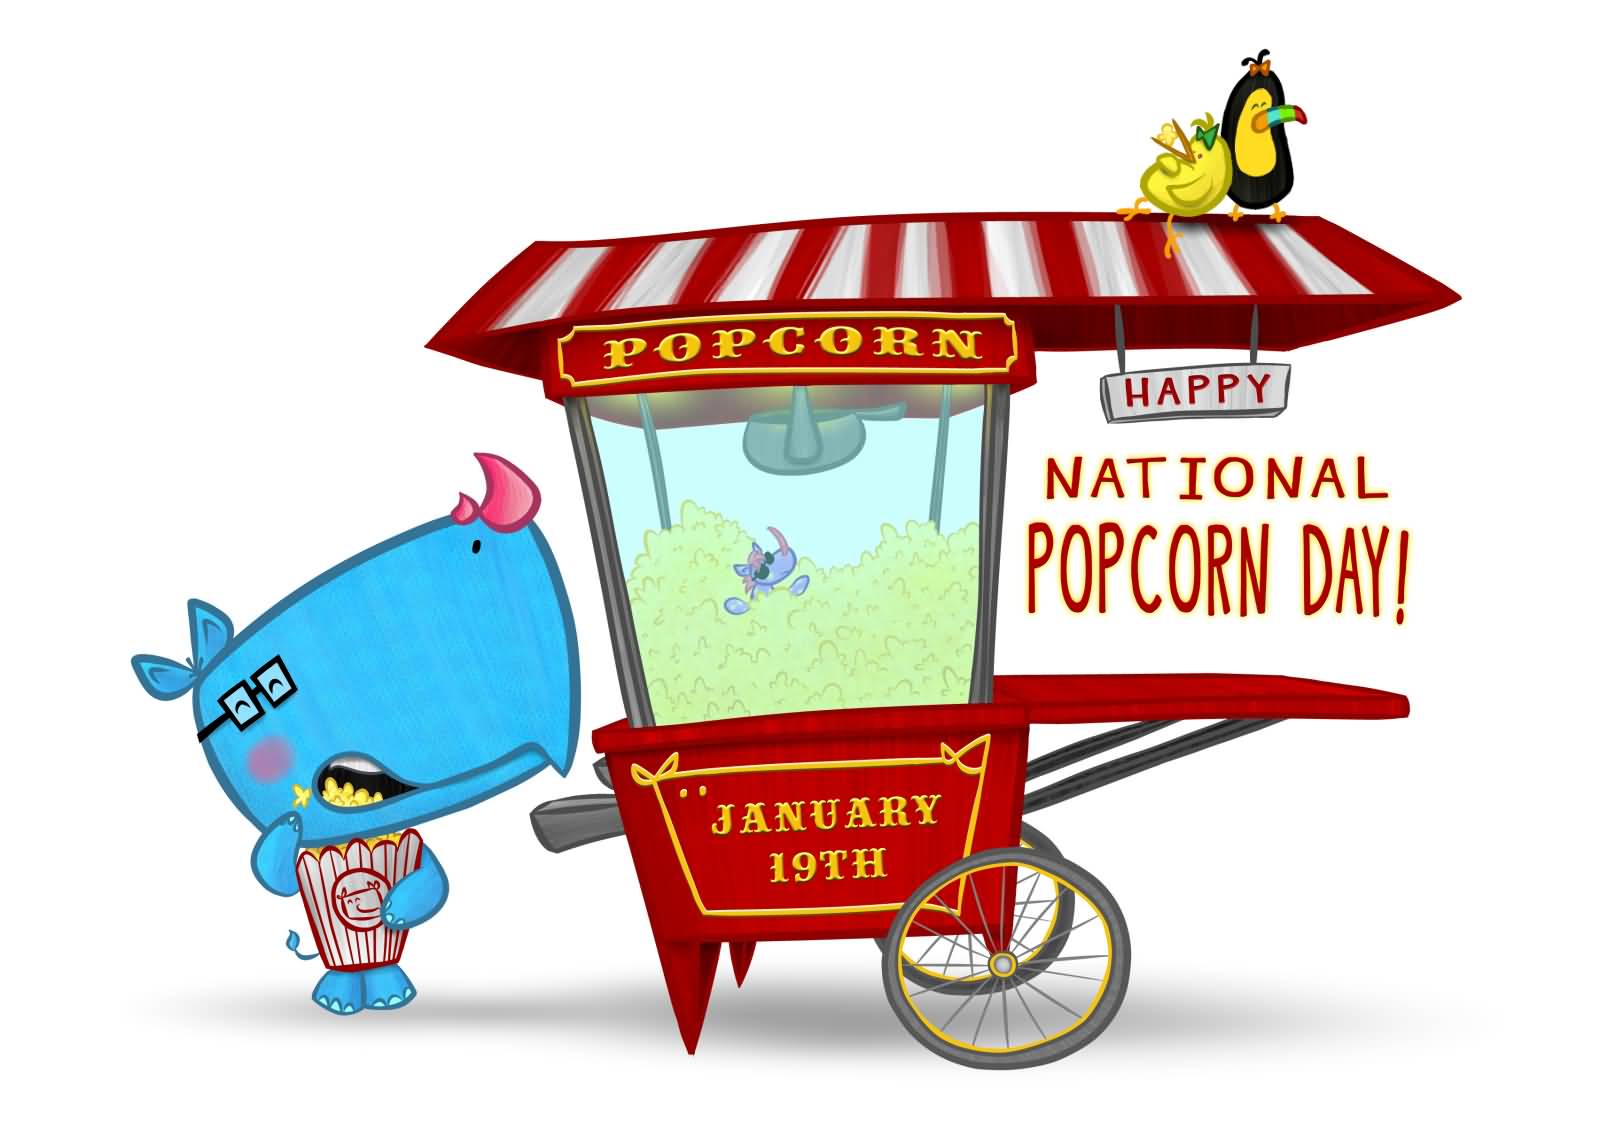 Happy National Popcorn Day January 19th